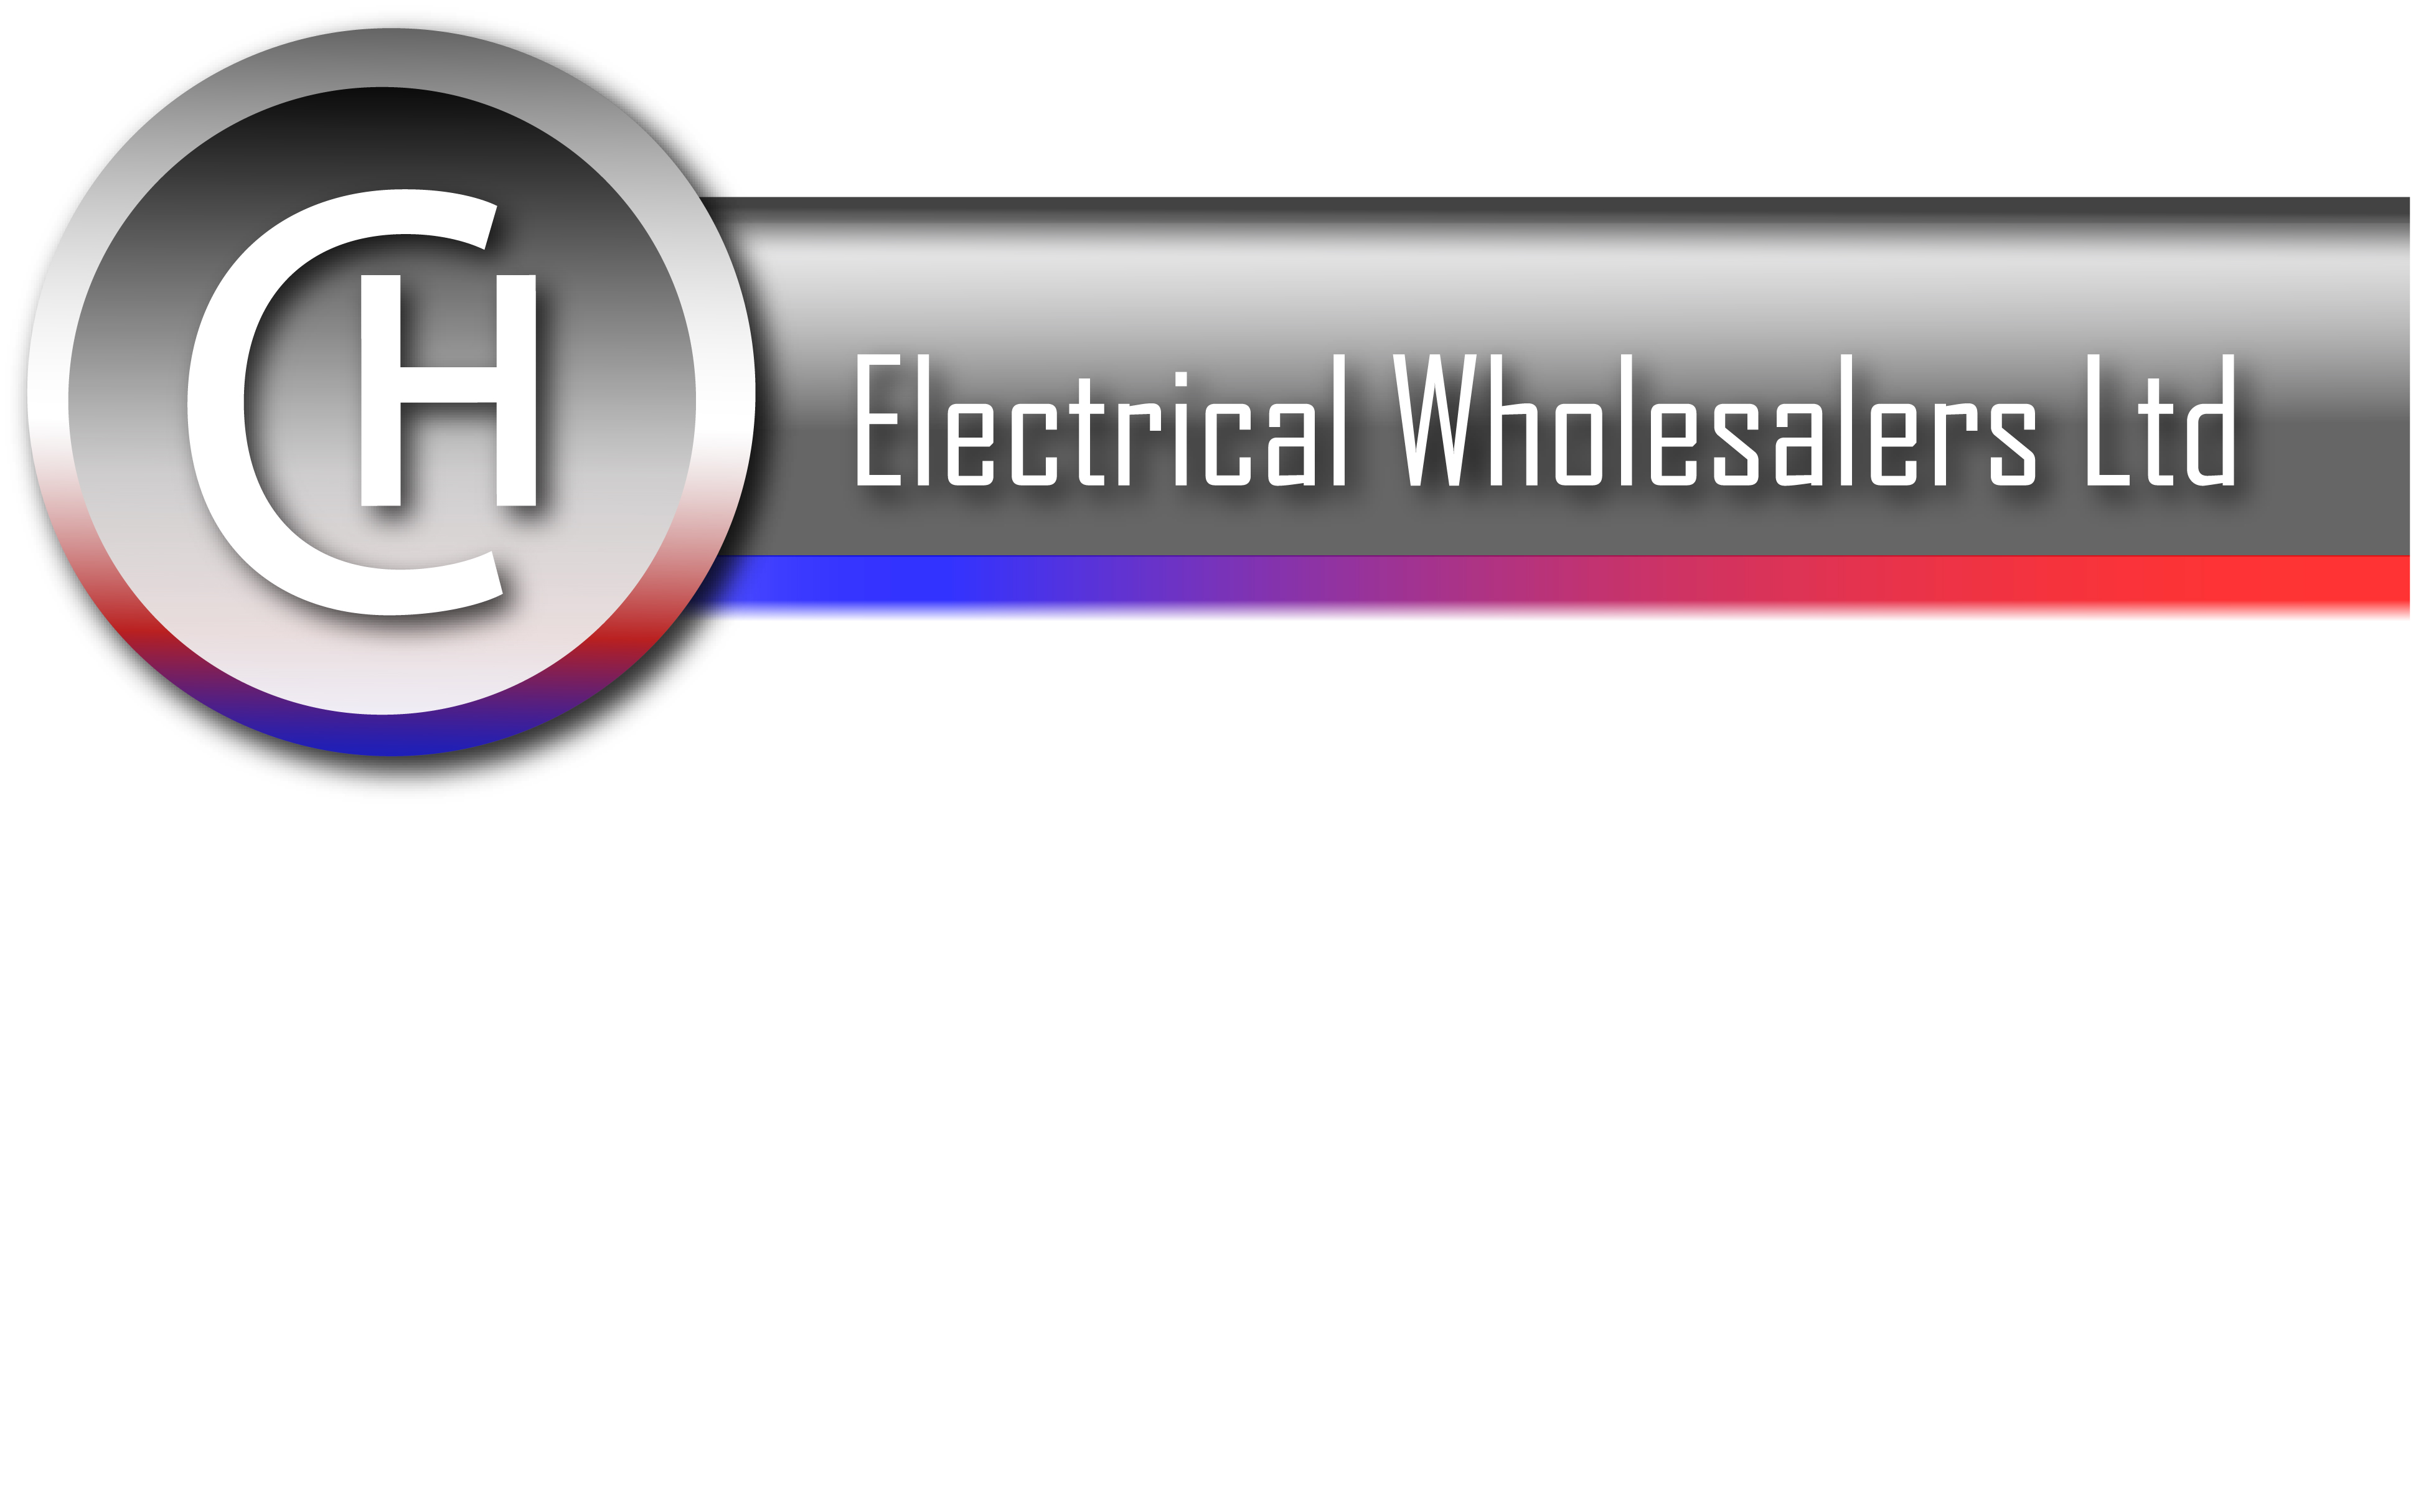 CH Electrical Wholesalers Ltd